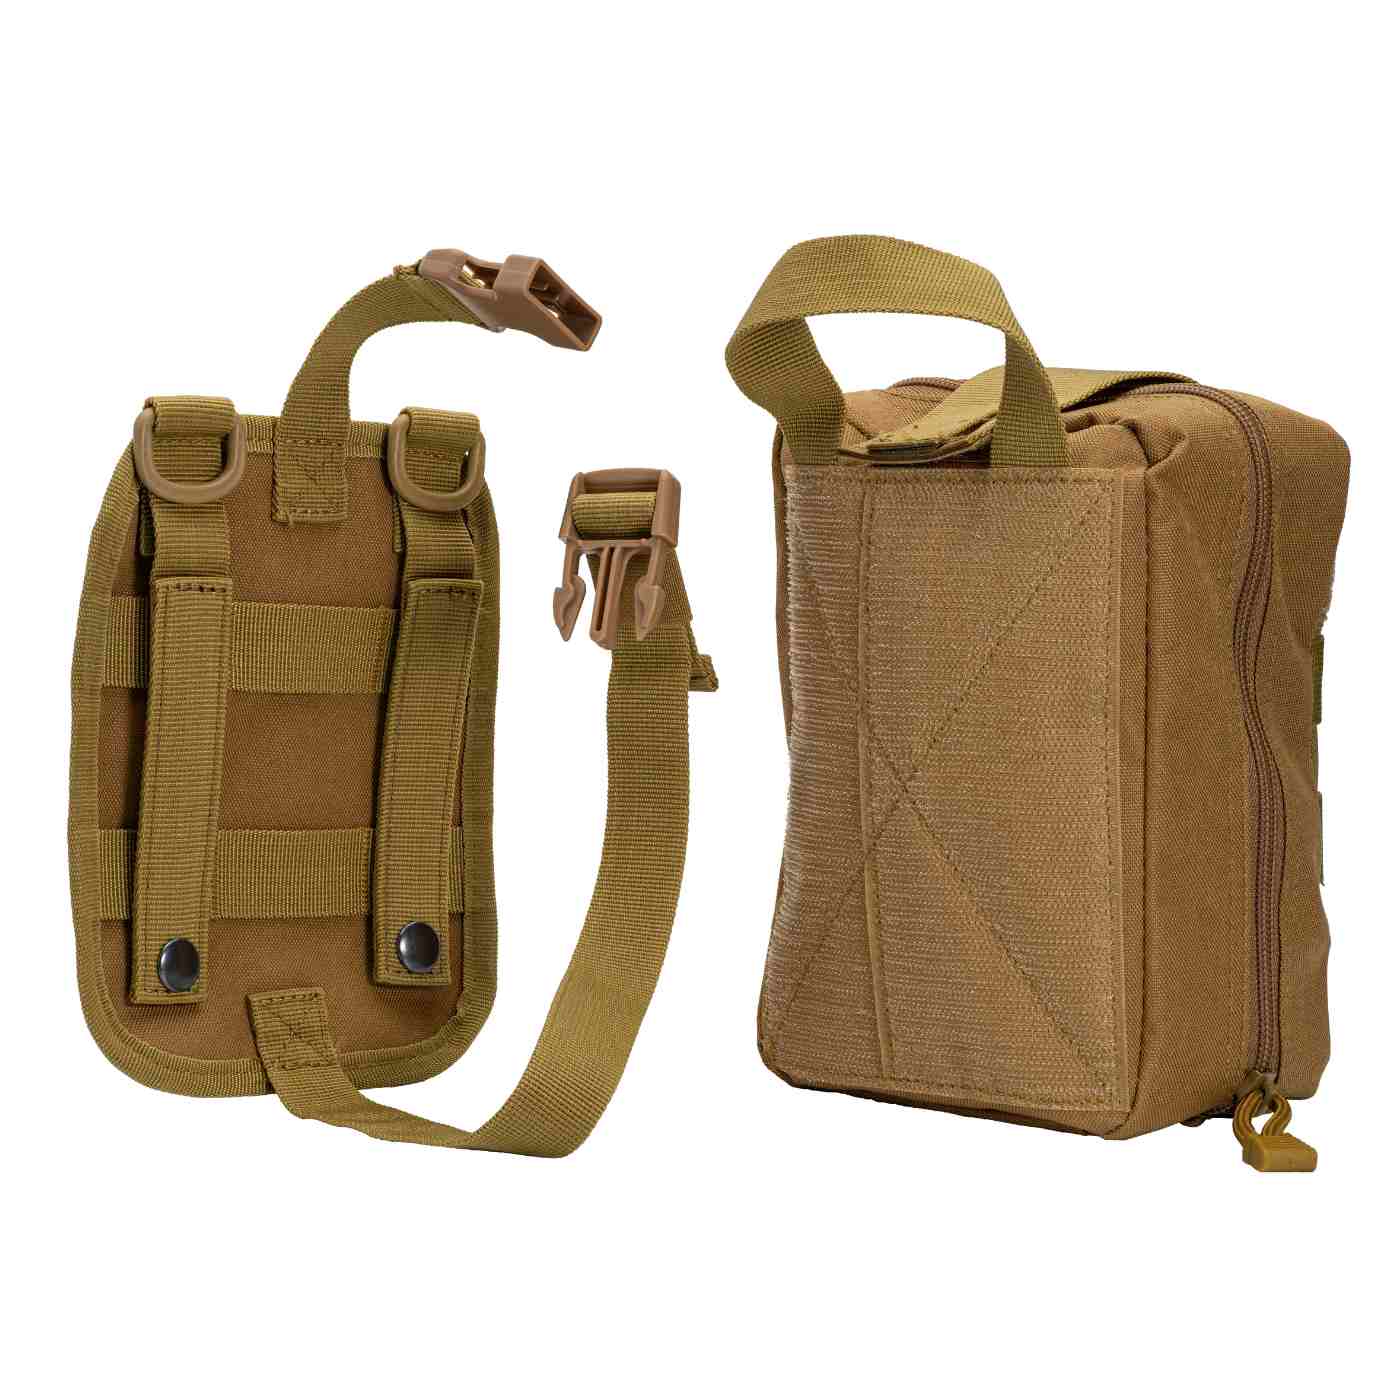 MOLLE Bag Trauma Kit 2.0 - Khaki kit with Velcro panel showing next to attachment panel